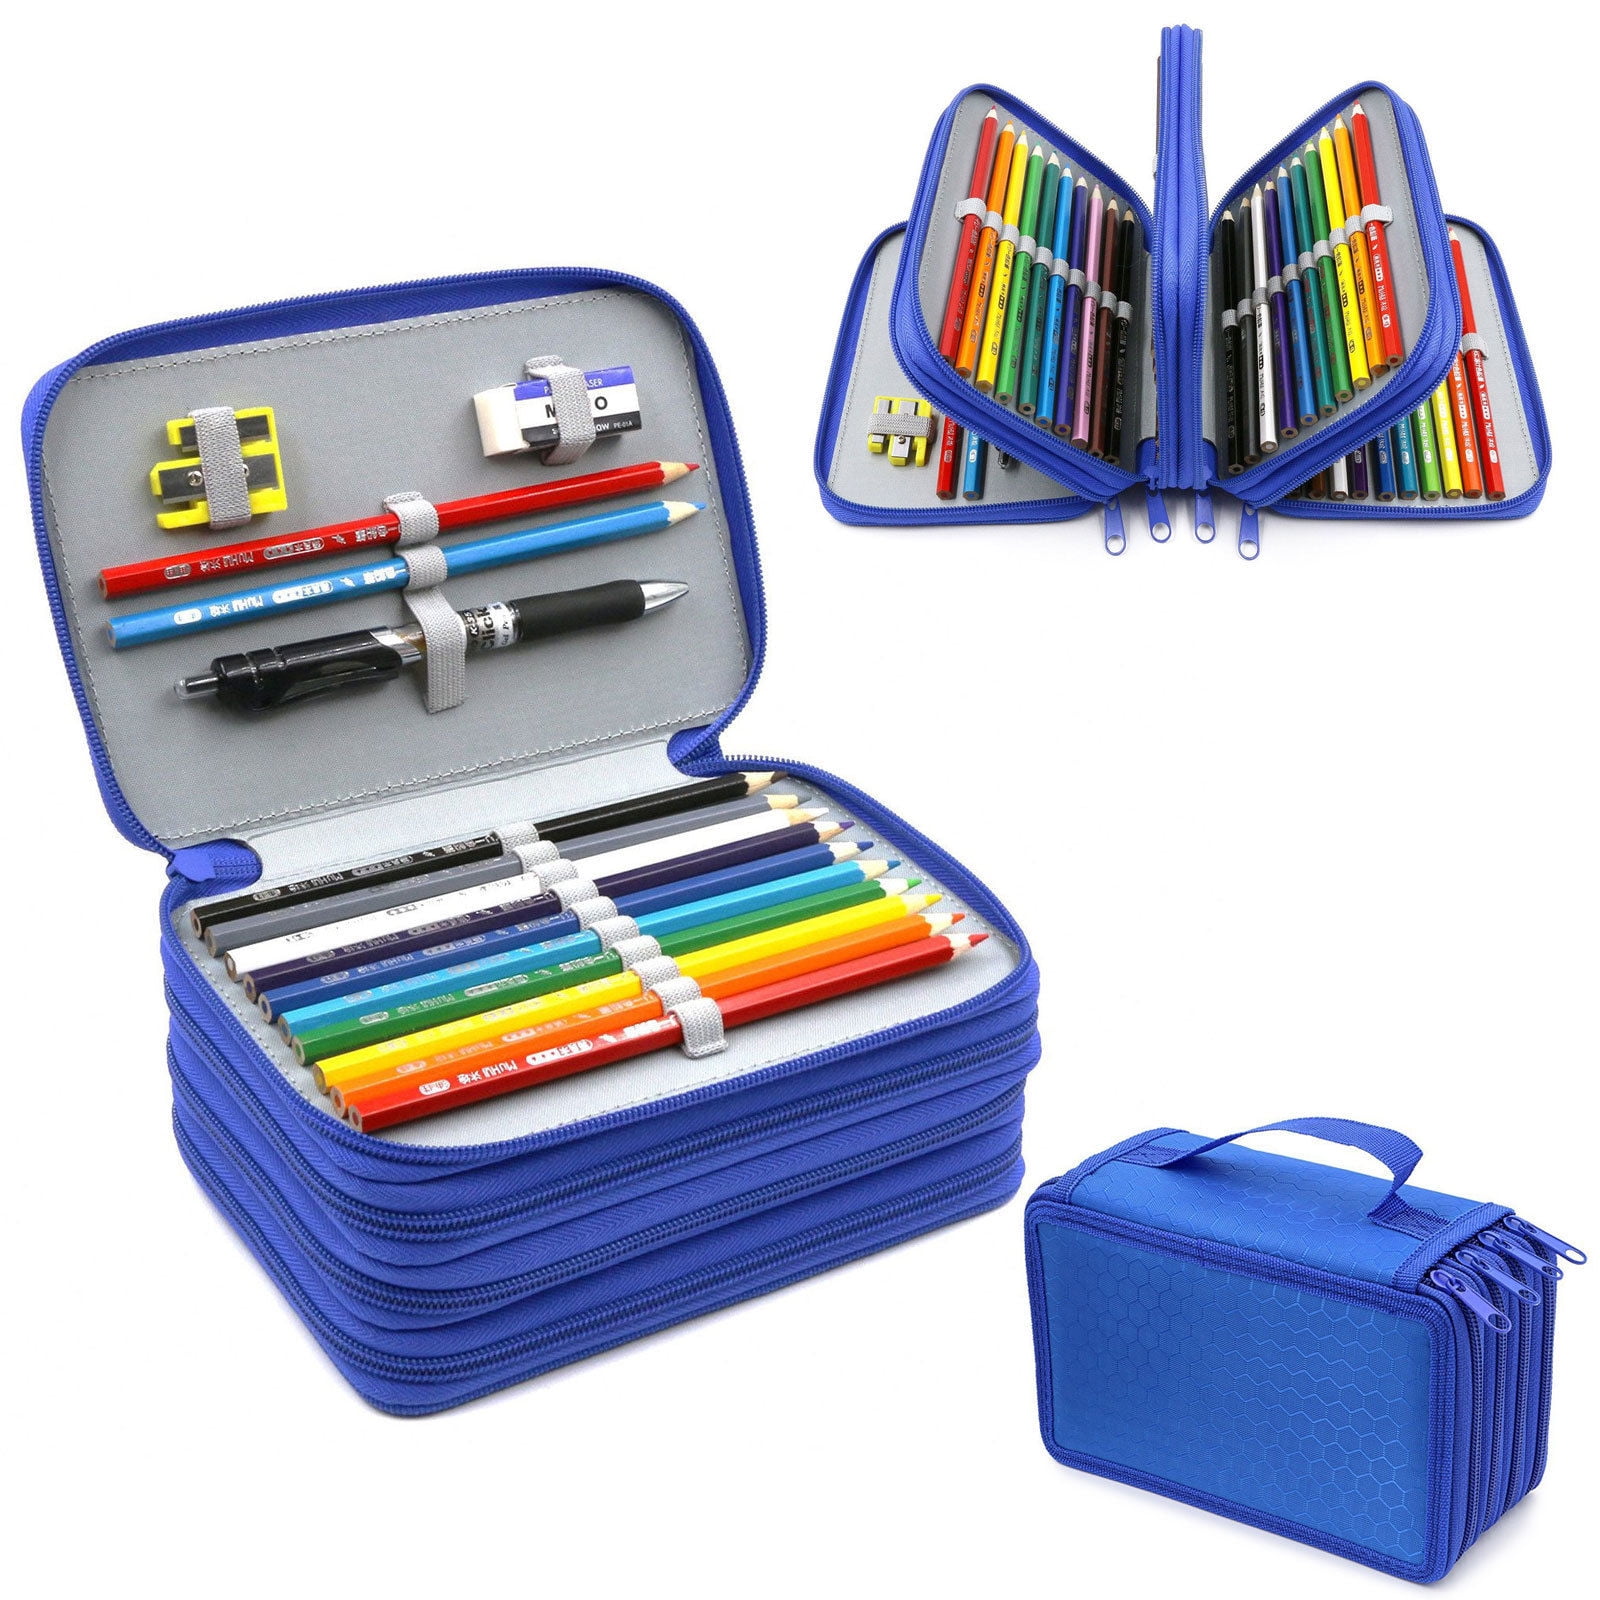 Large 72 Slot Pen Pencil Cases Stationery Pouch Bag Case School College Parts uk 